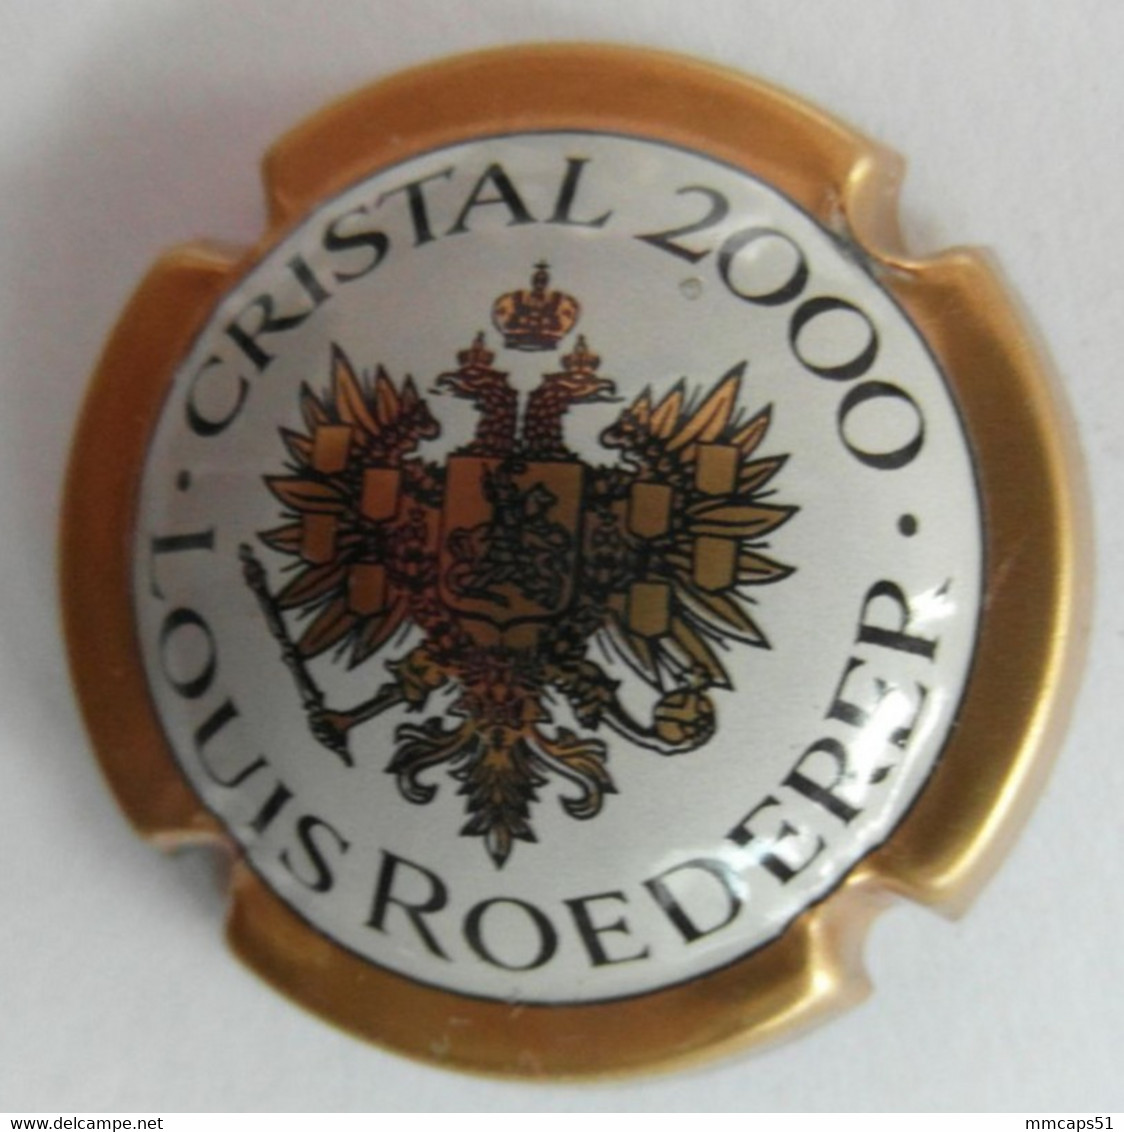 AN 2000 JEROBOAM ROEDERER  Cristal 2000 , N°98 . Capsule De Champagne - Röderer, Louis